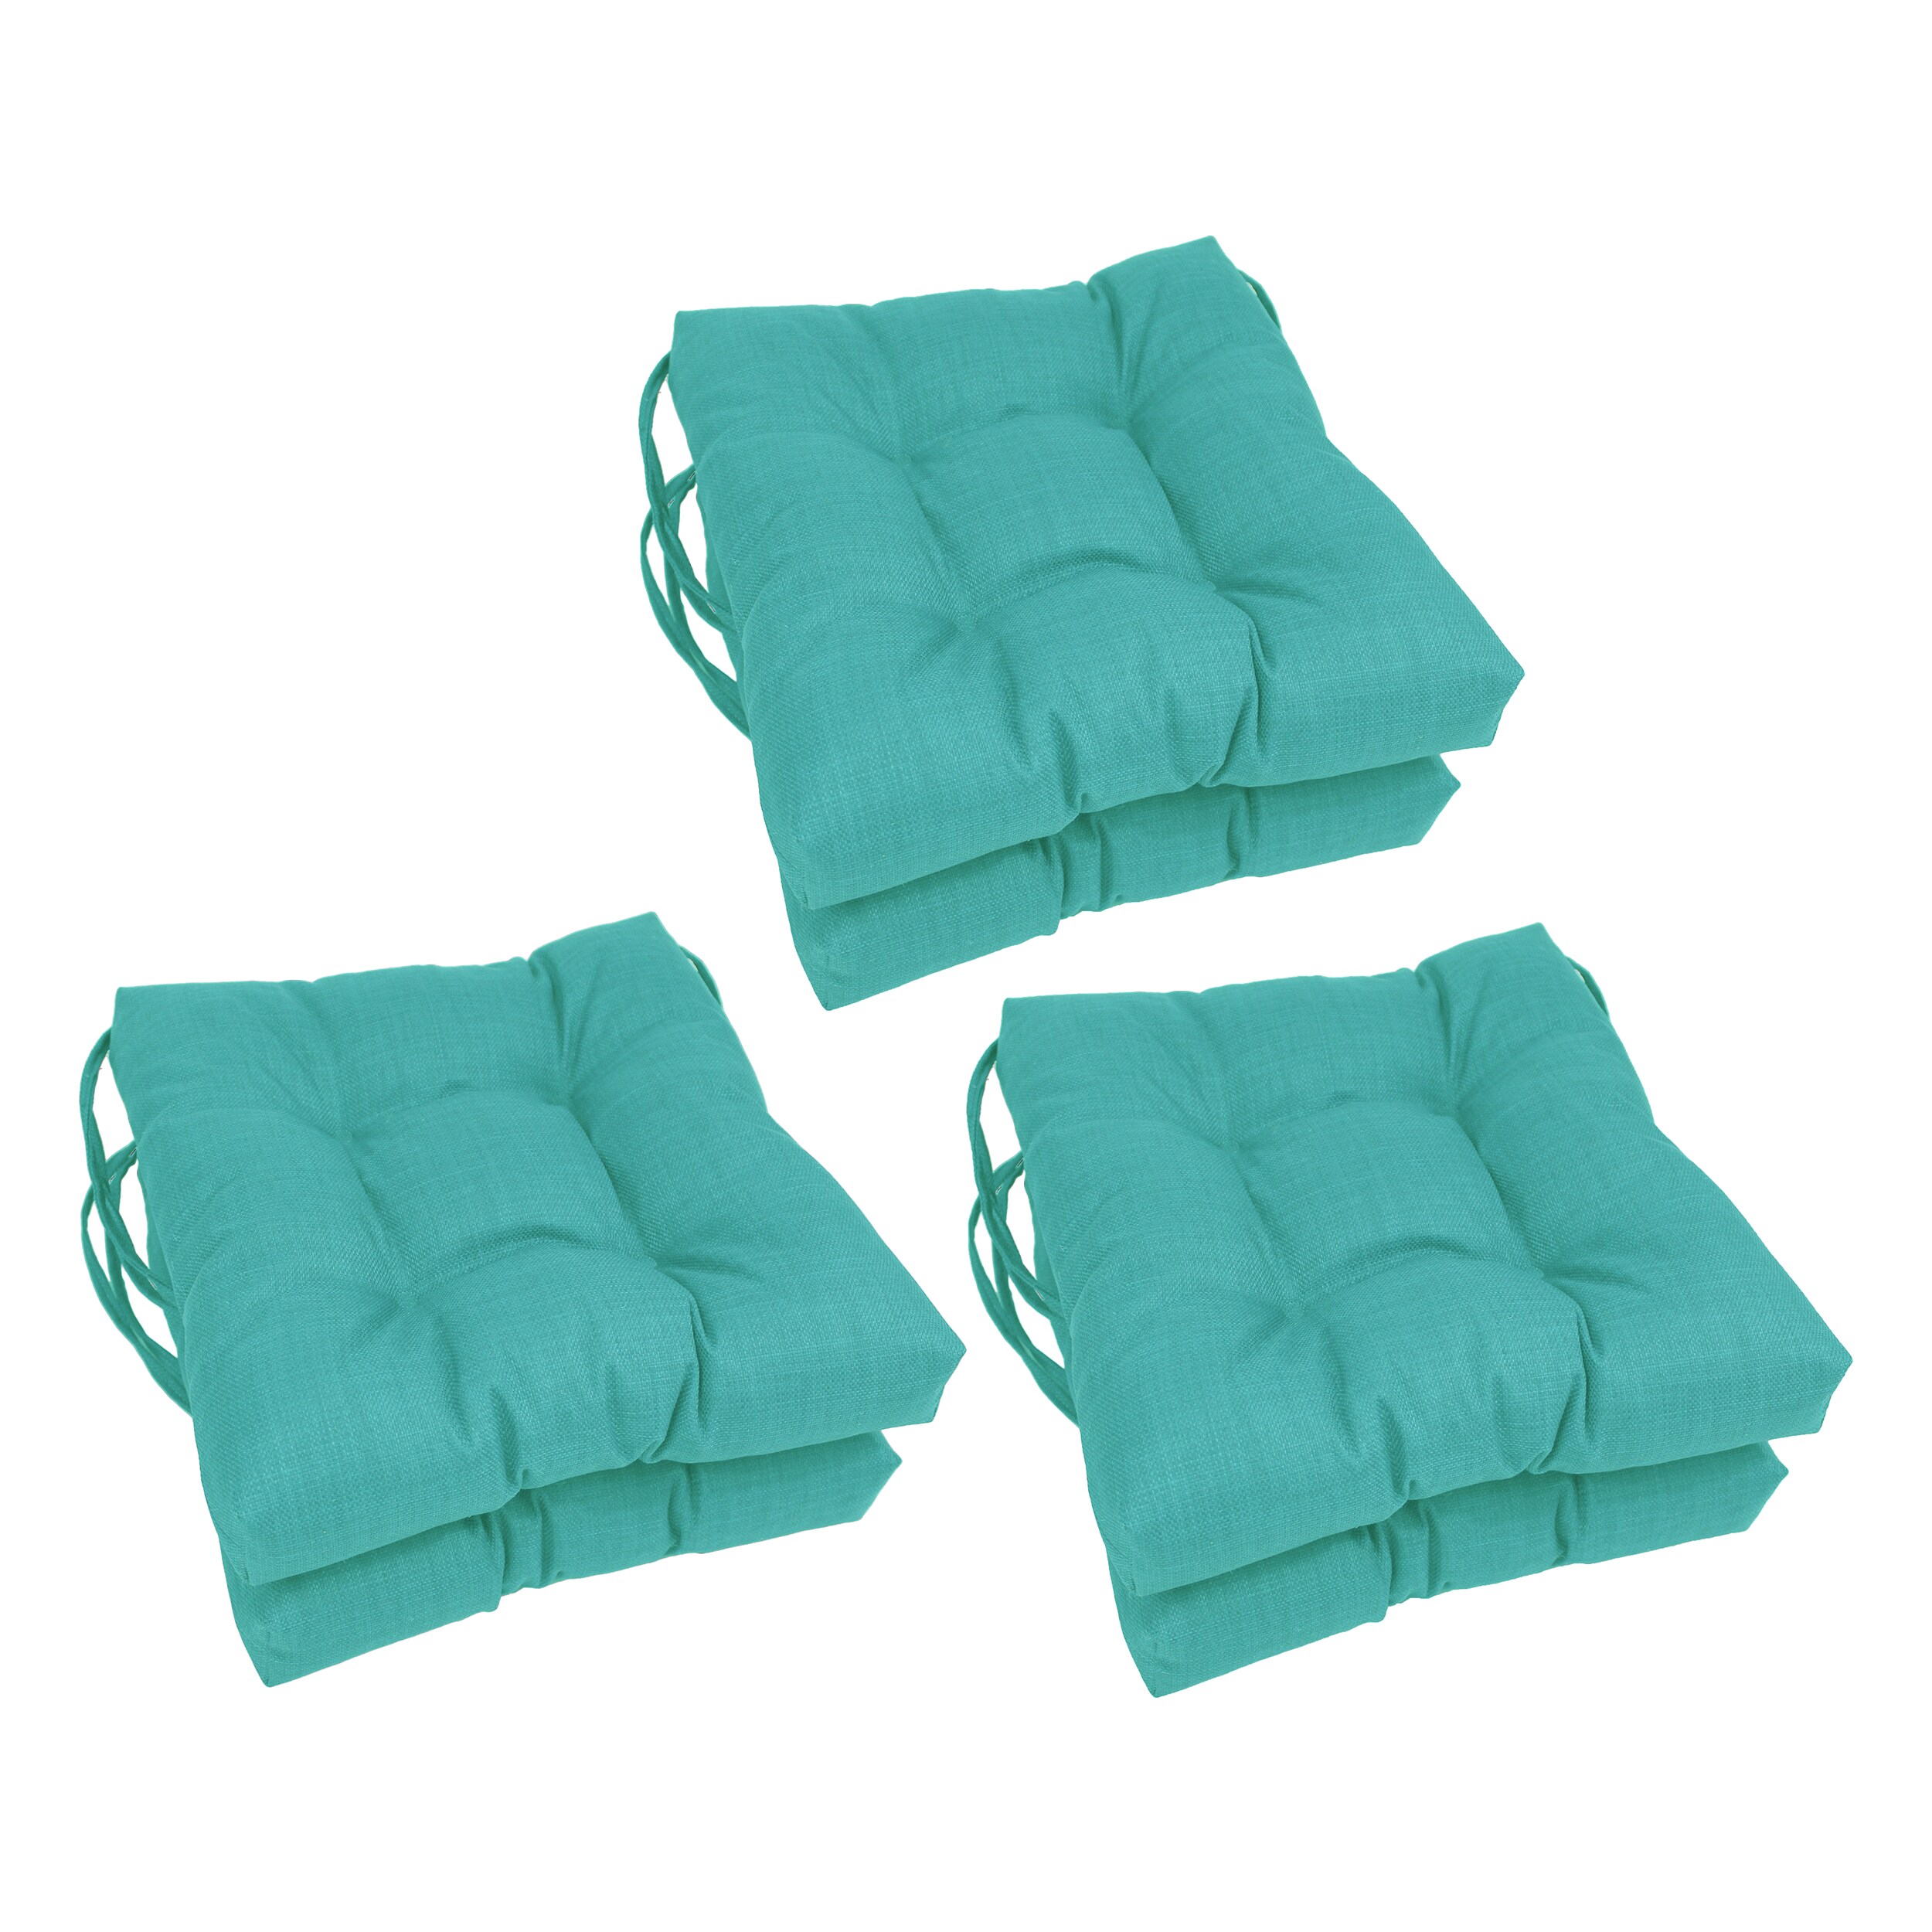 3pcs Heat Resistant Press Pillows Pads Waterproof Heat Pressing Cushion